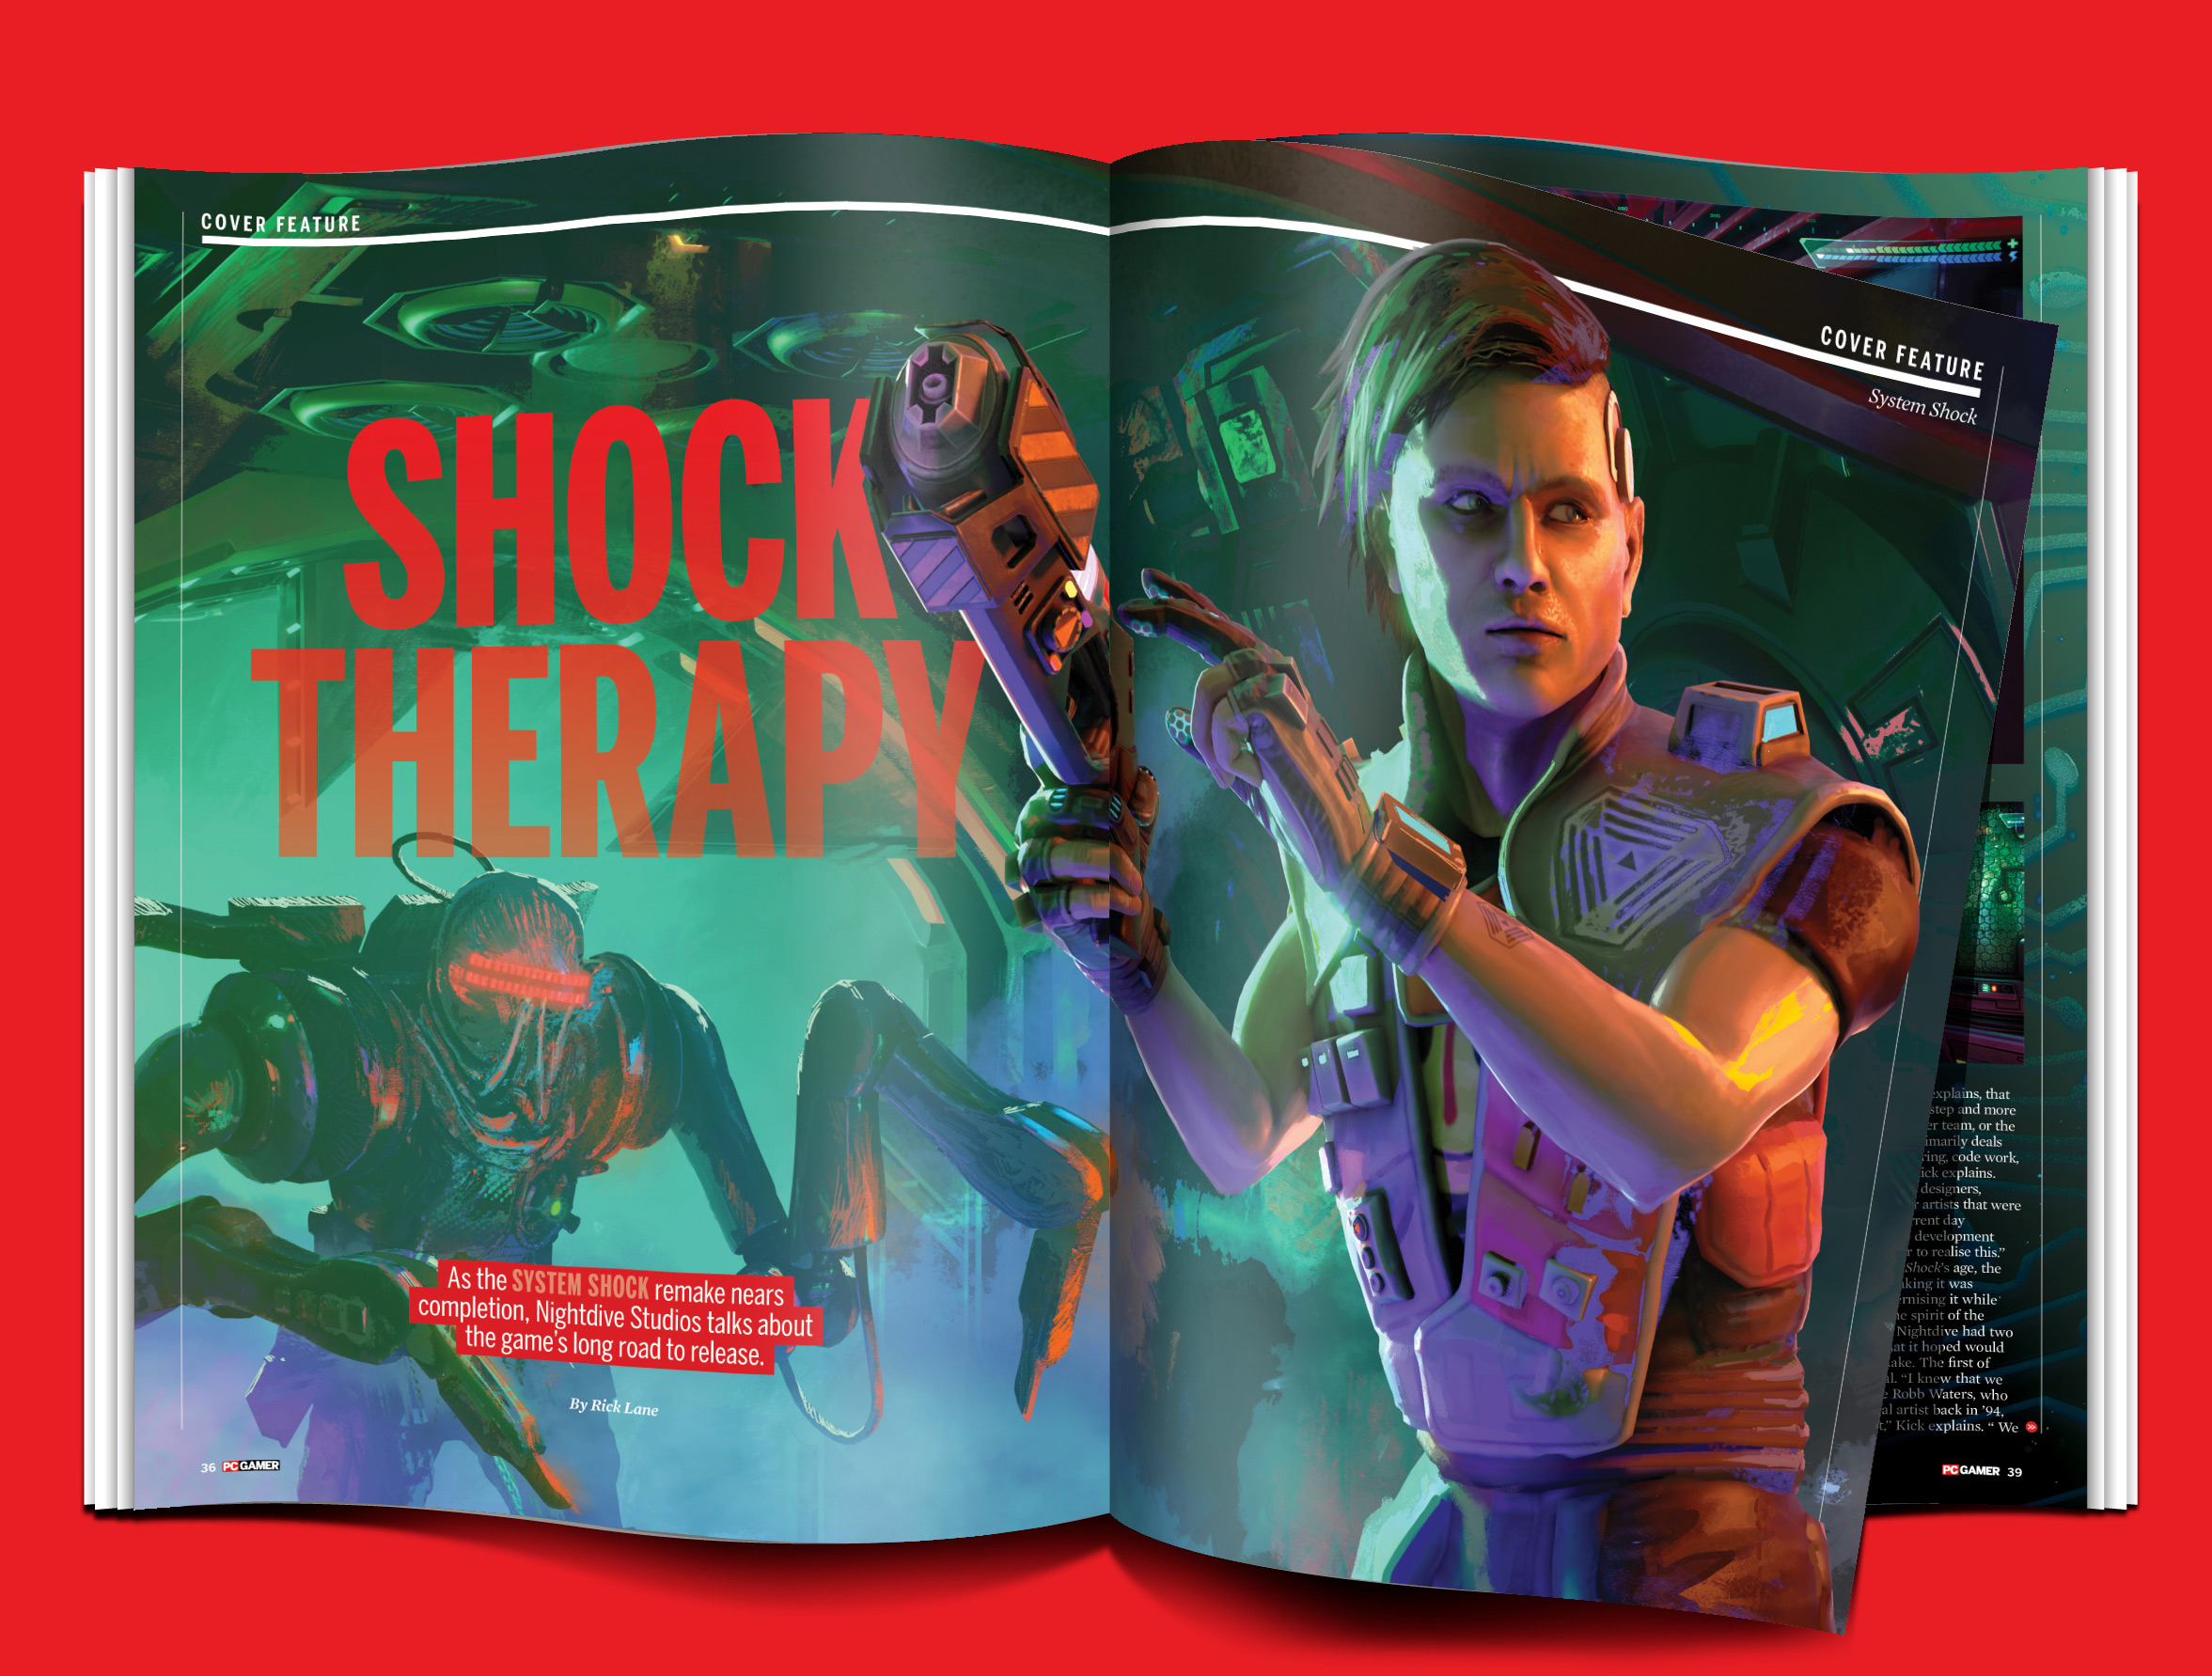 PC Gamer magazine issue 380 System Shock spread